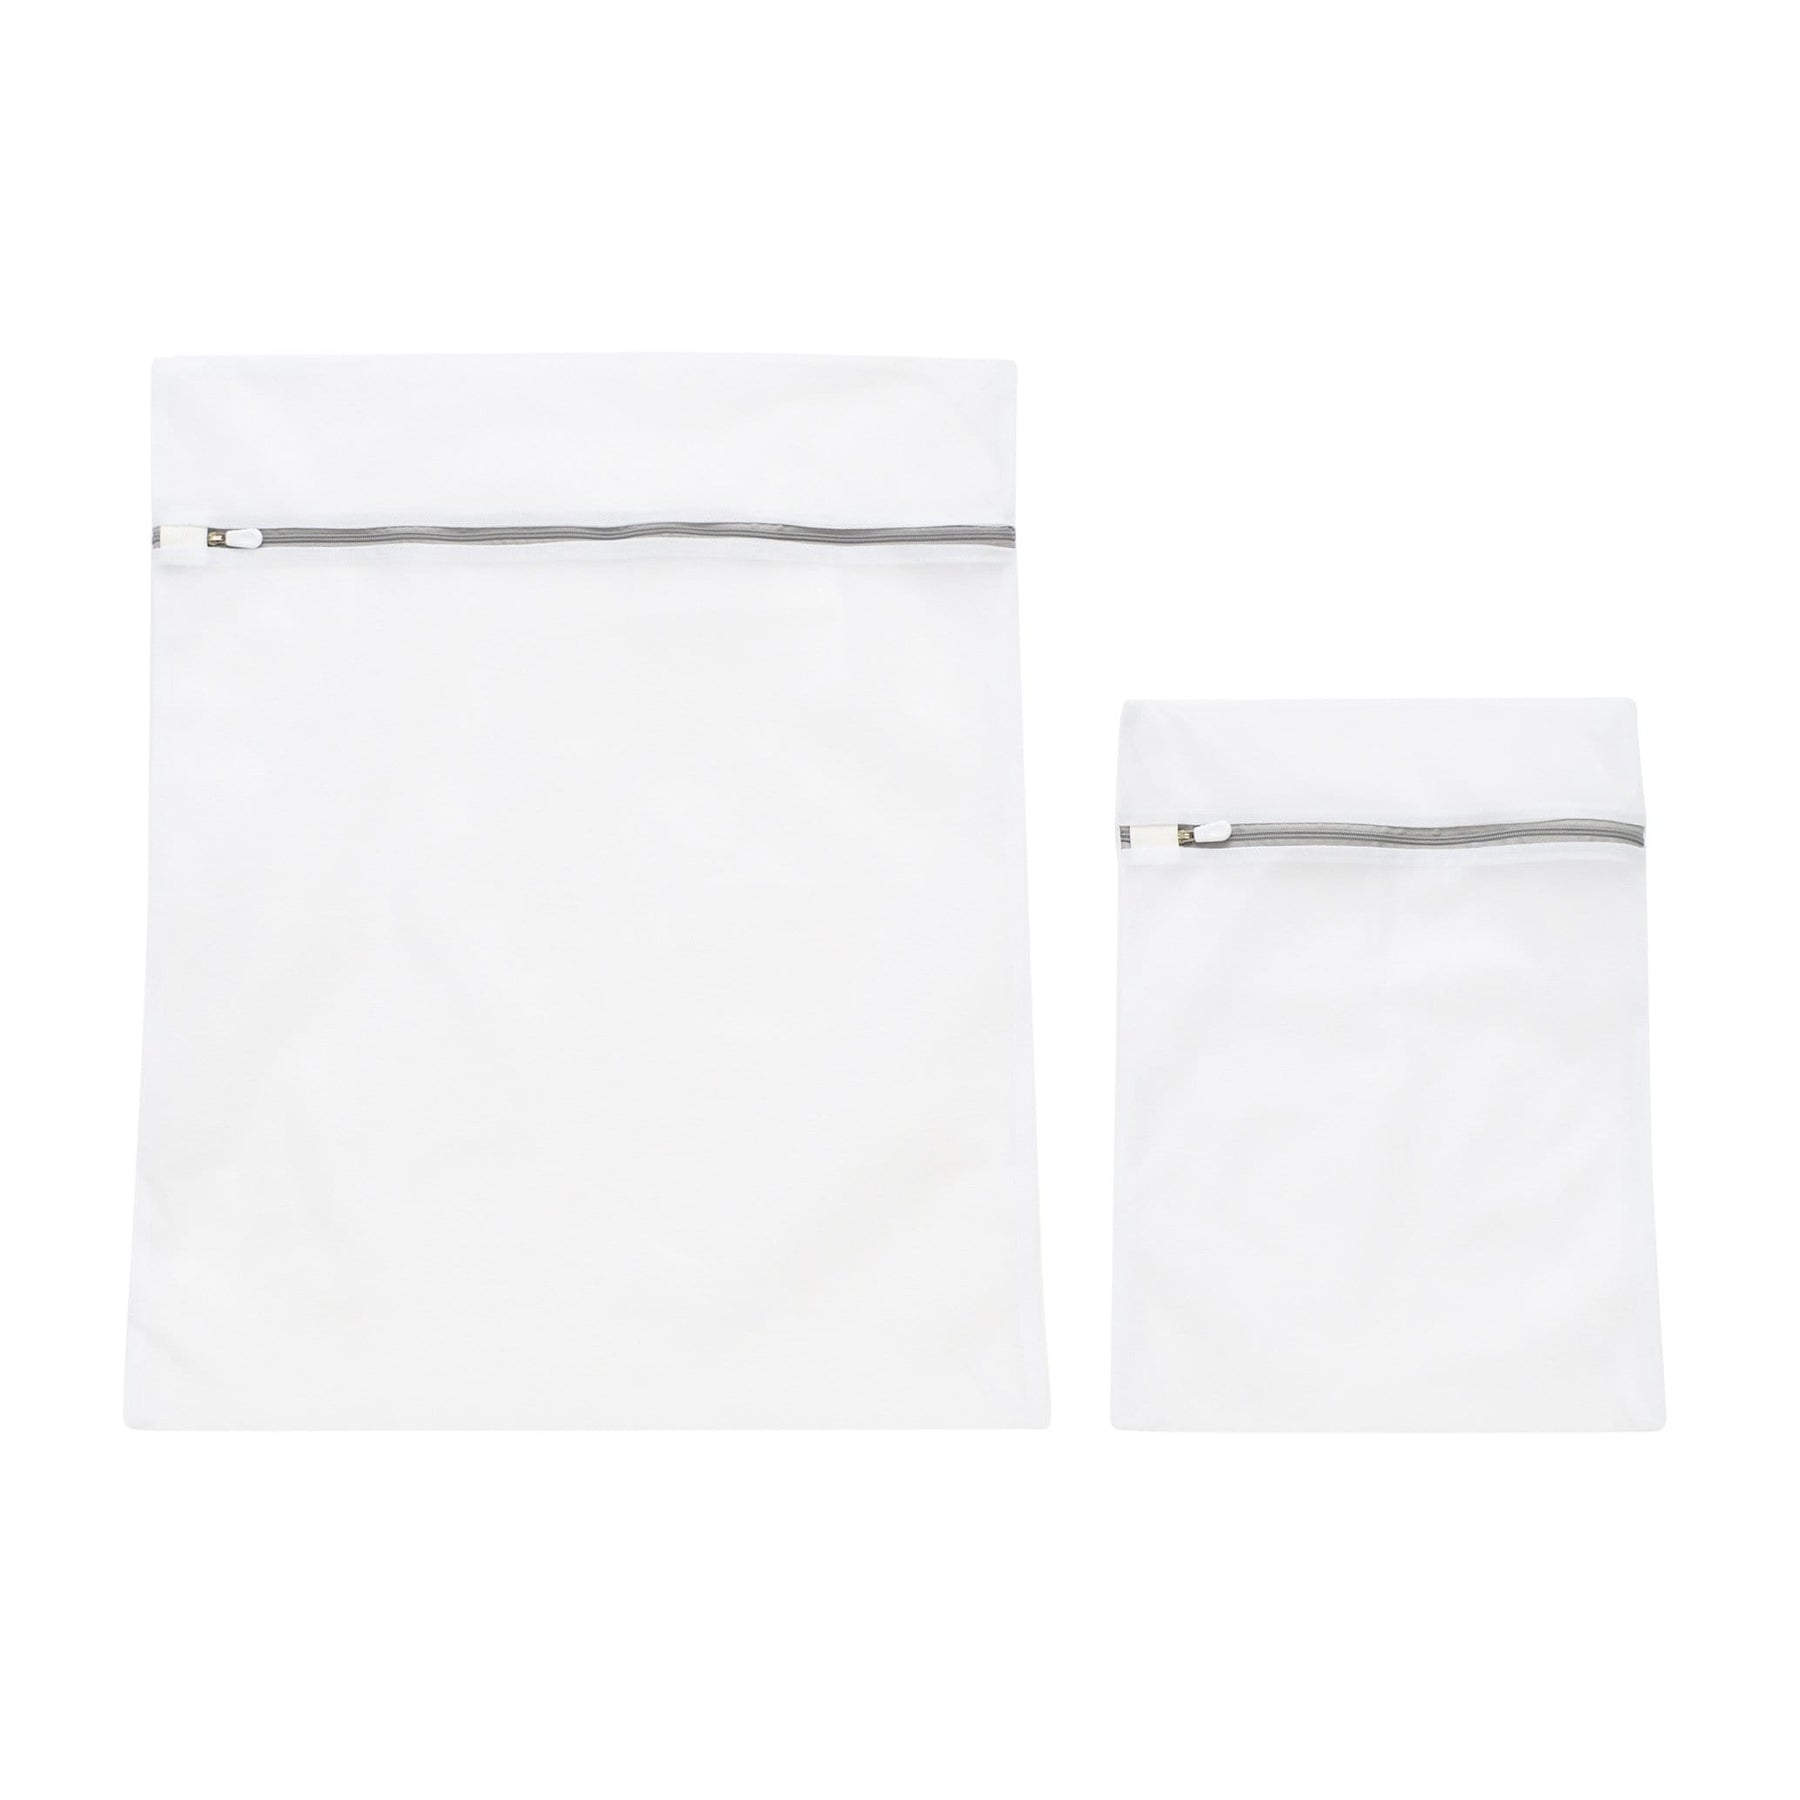 White Mesh Laundry Bags (Set of 2)